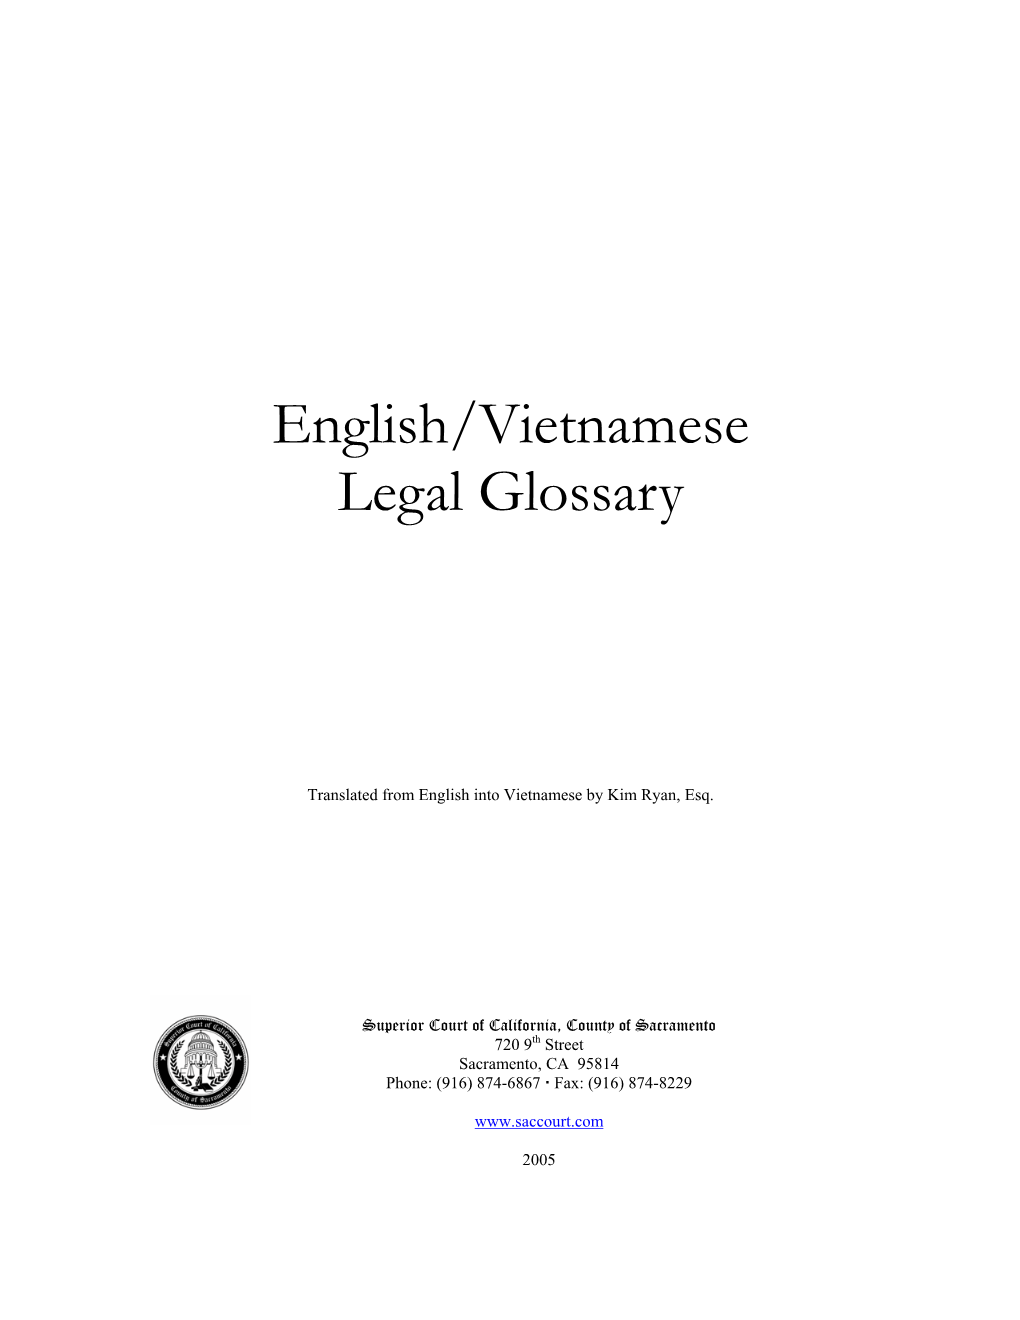 English/Vietnamese Legal Glossary